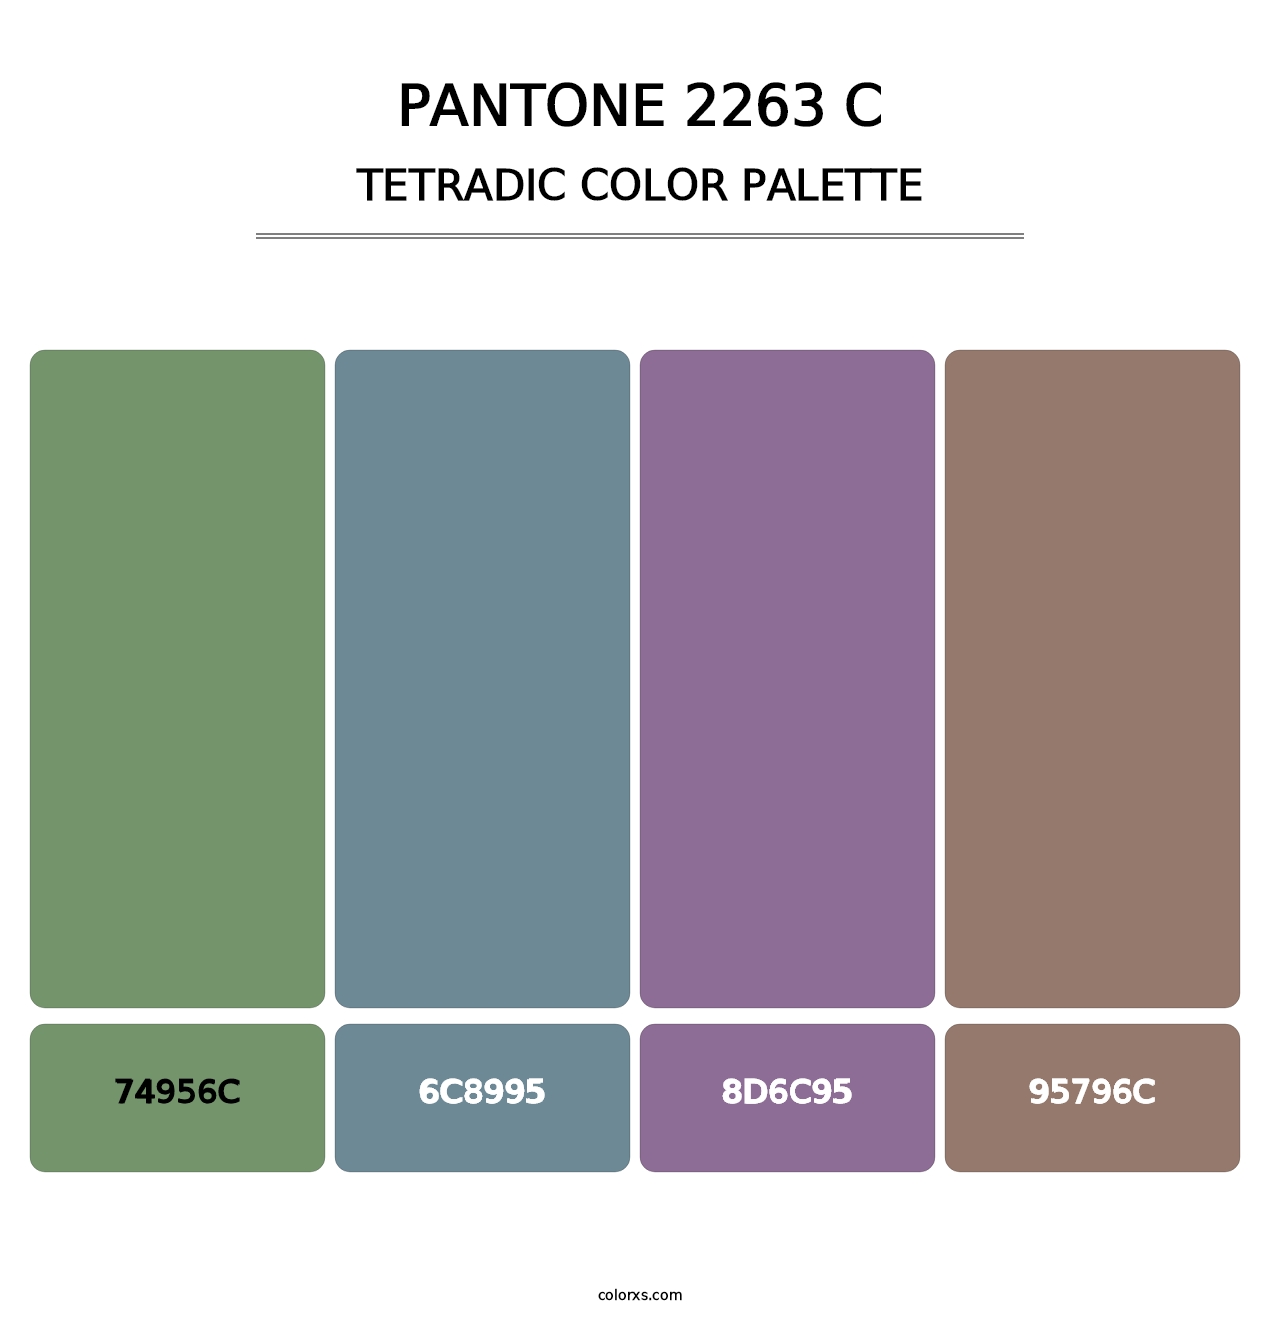 PANTONE 2263 C - Tetradic Color Palette